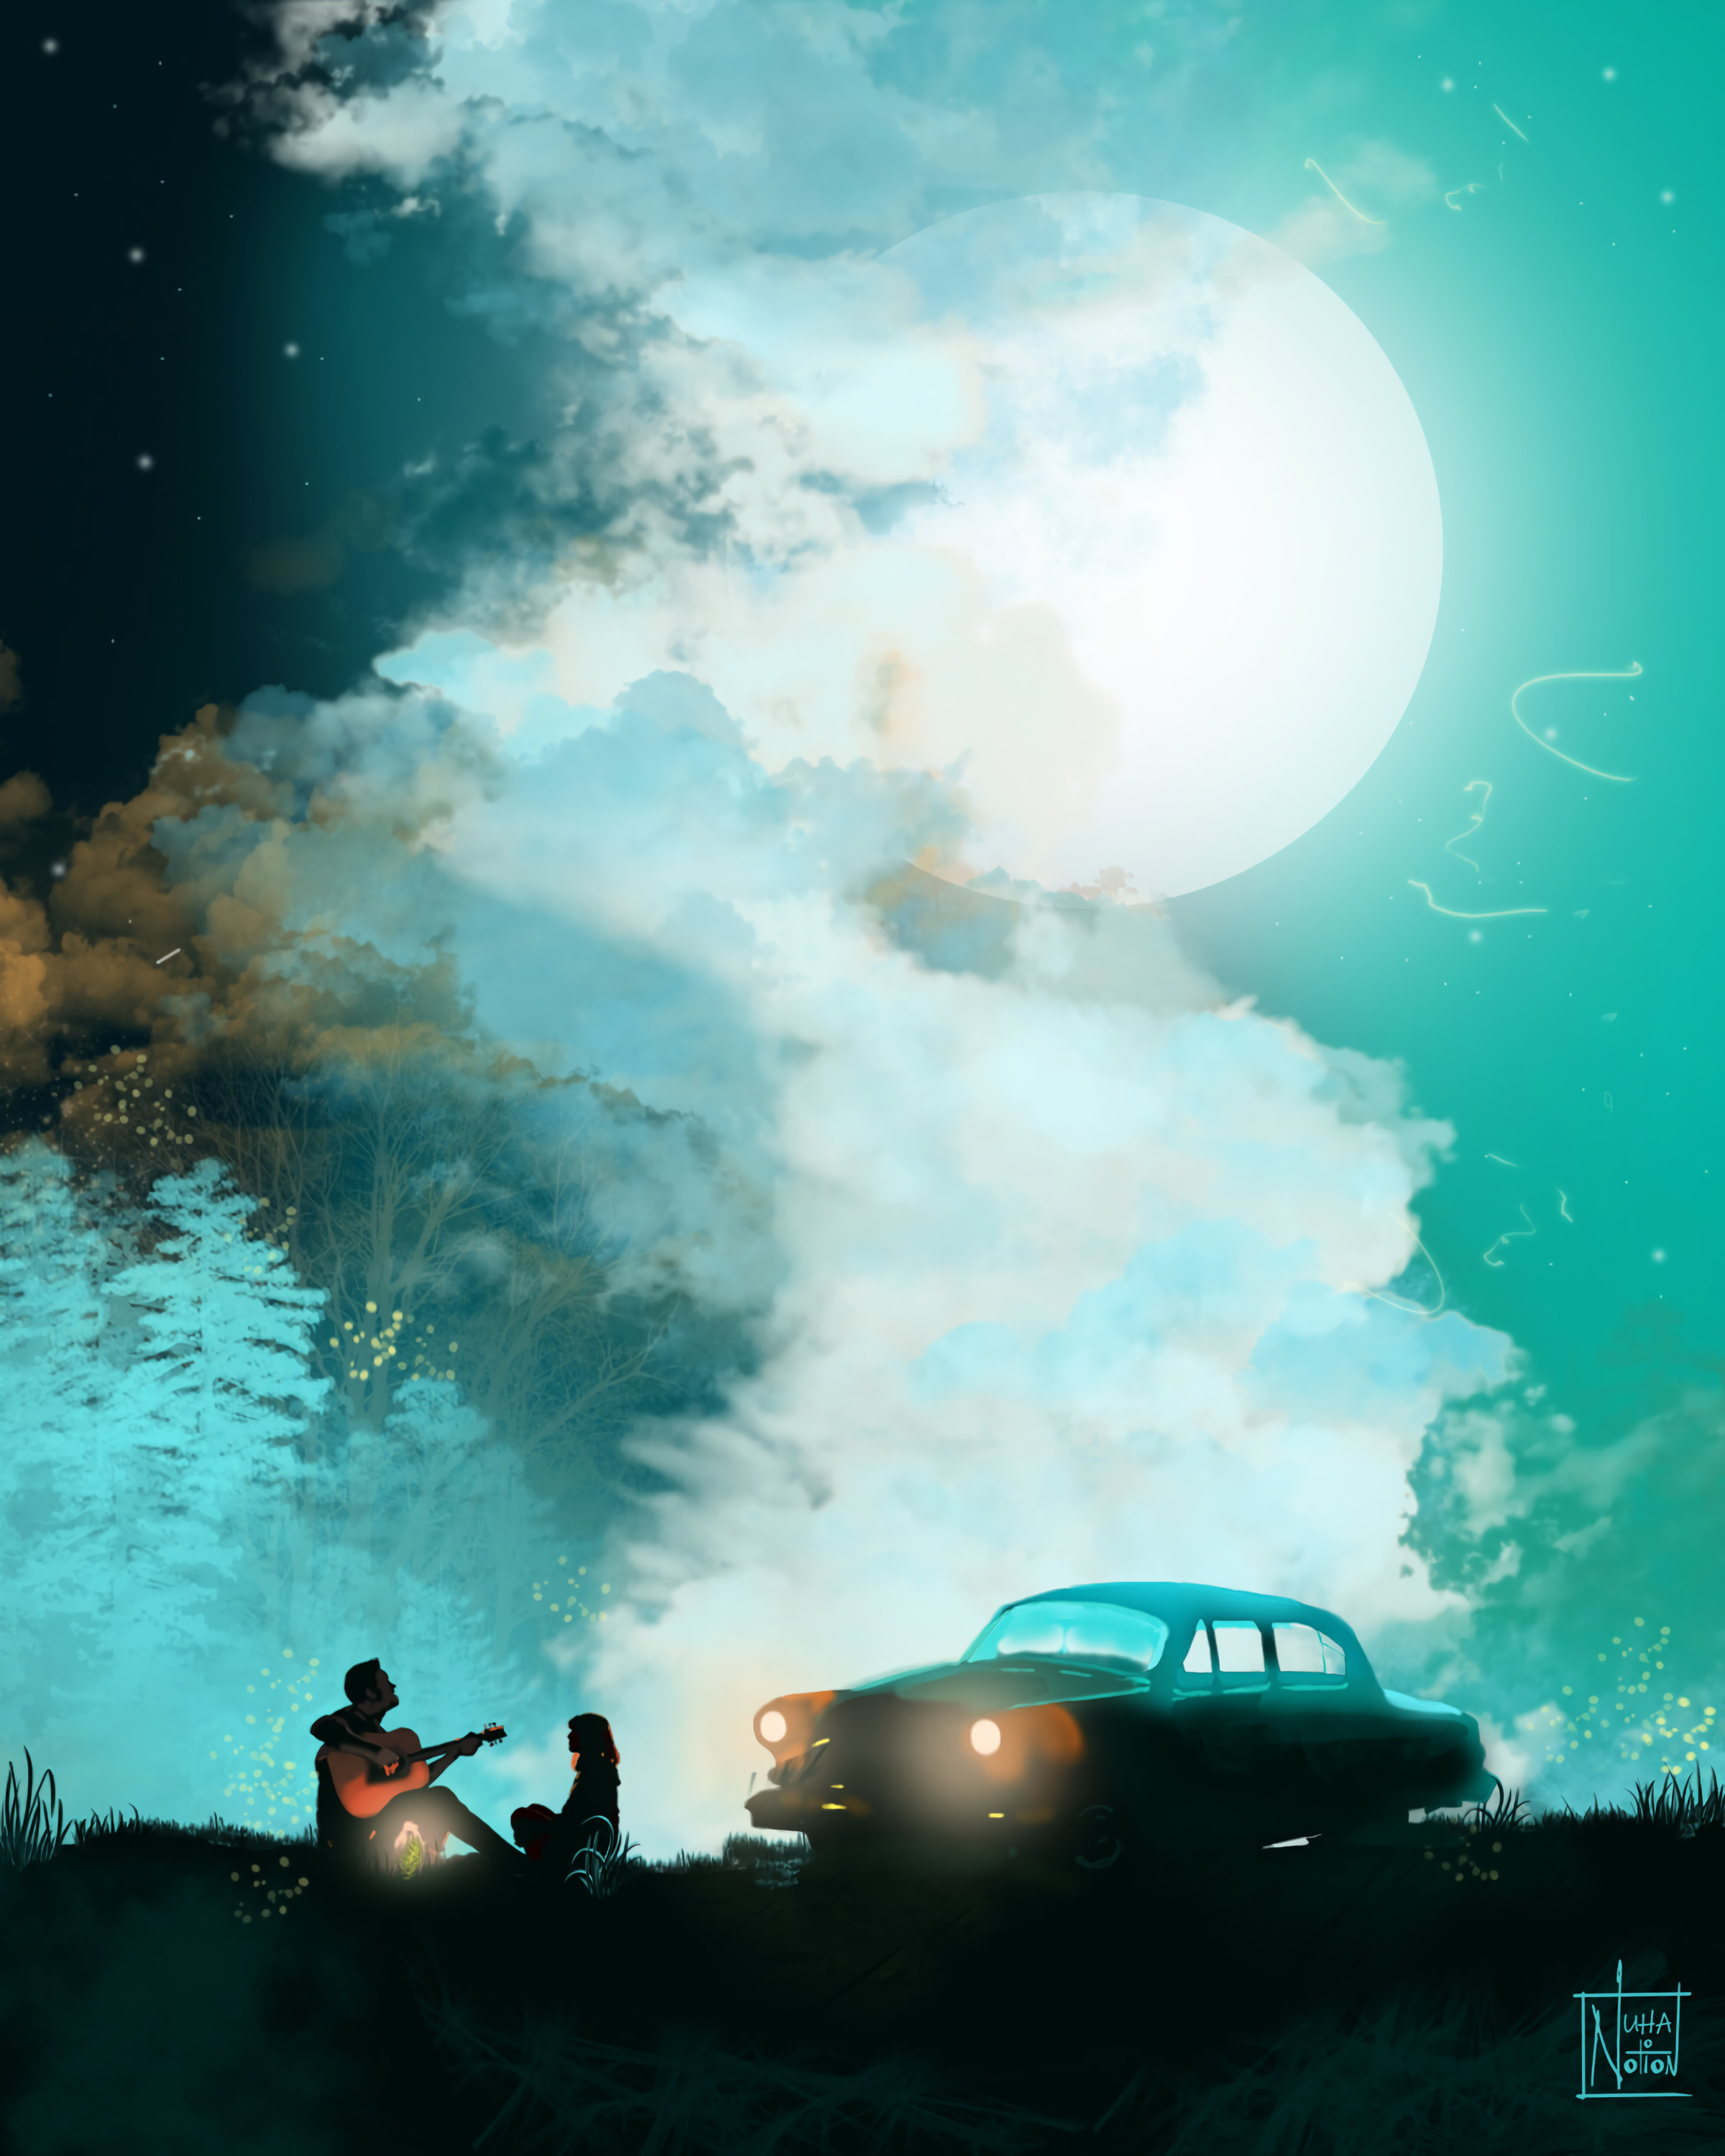 guitar, art, night, silhouettes, moon, car